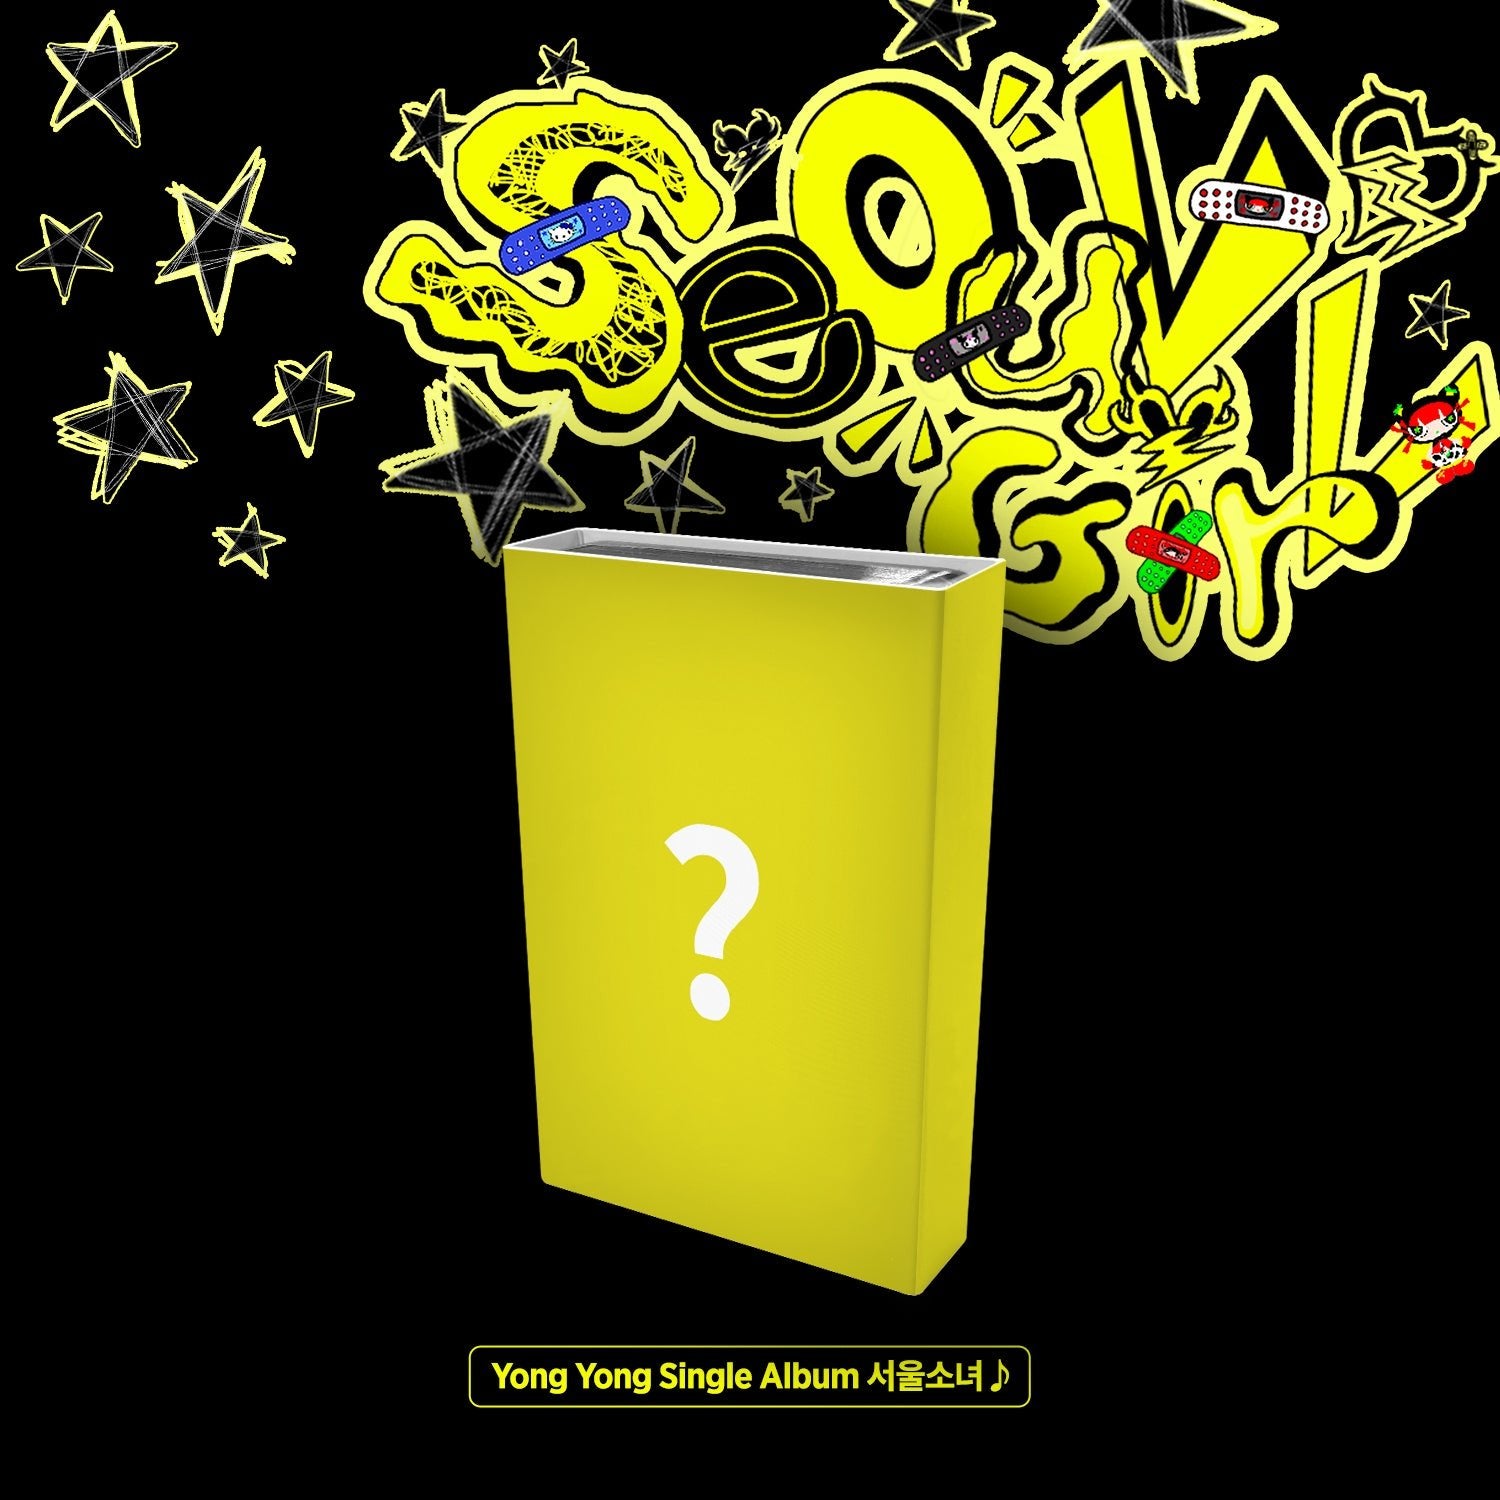 YongYong - YY Double Single Album [서울소녀 ♪] Nemo Album Full Ver. Kpop Album - Seoulfy